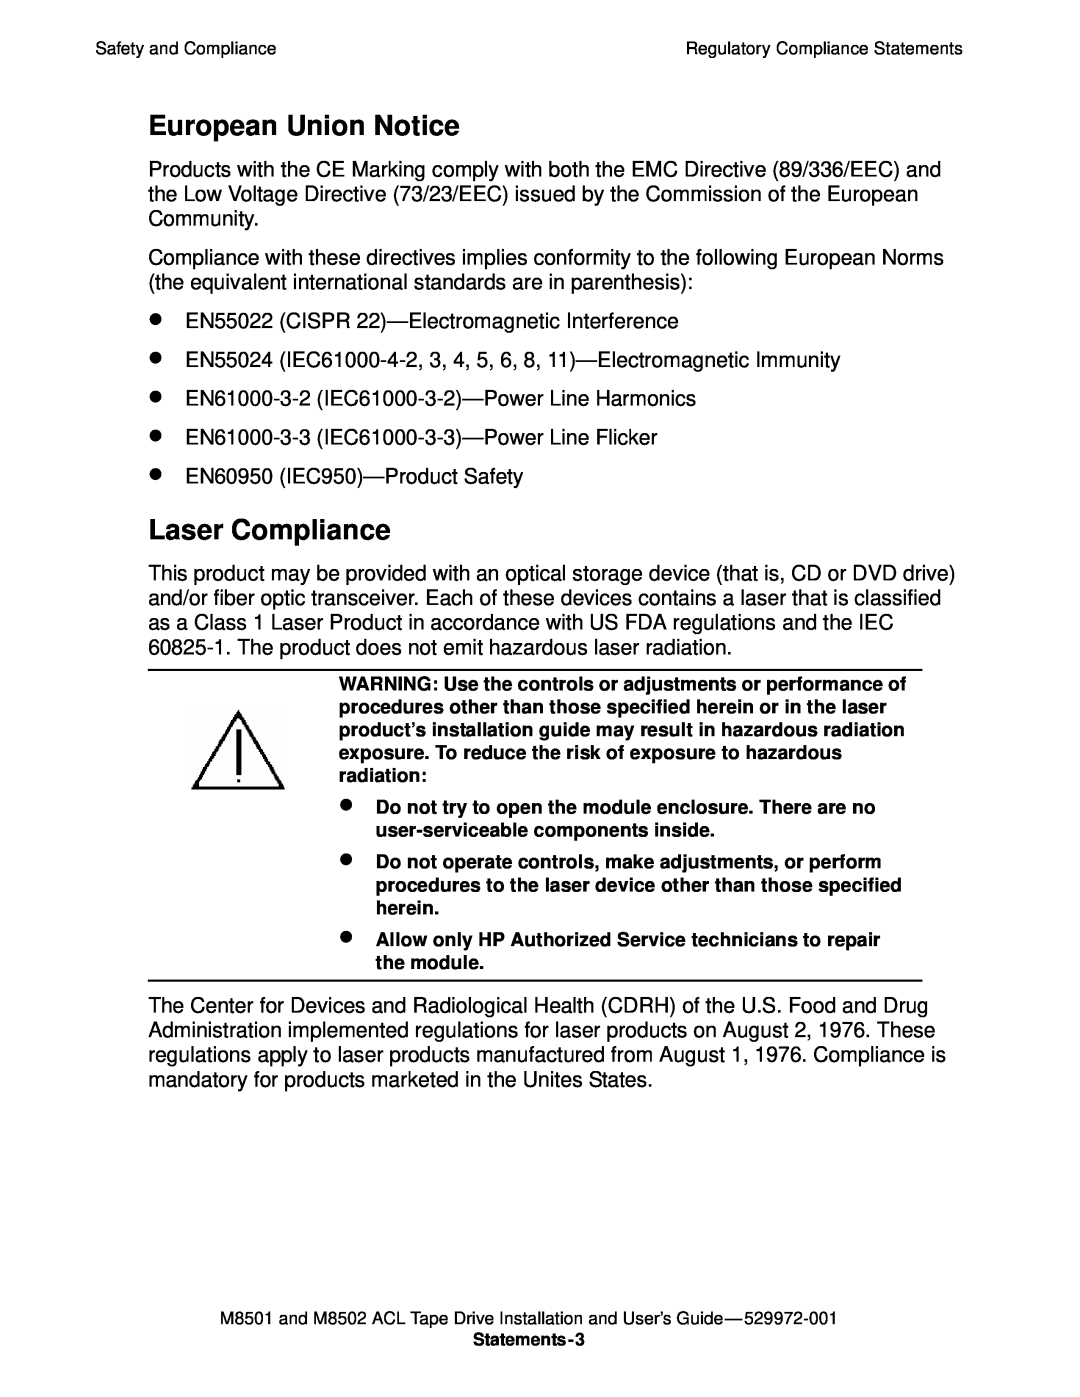 SMC Networks M8501 manual European Union Notice, Laser Compliance 